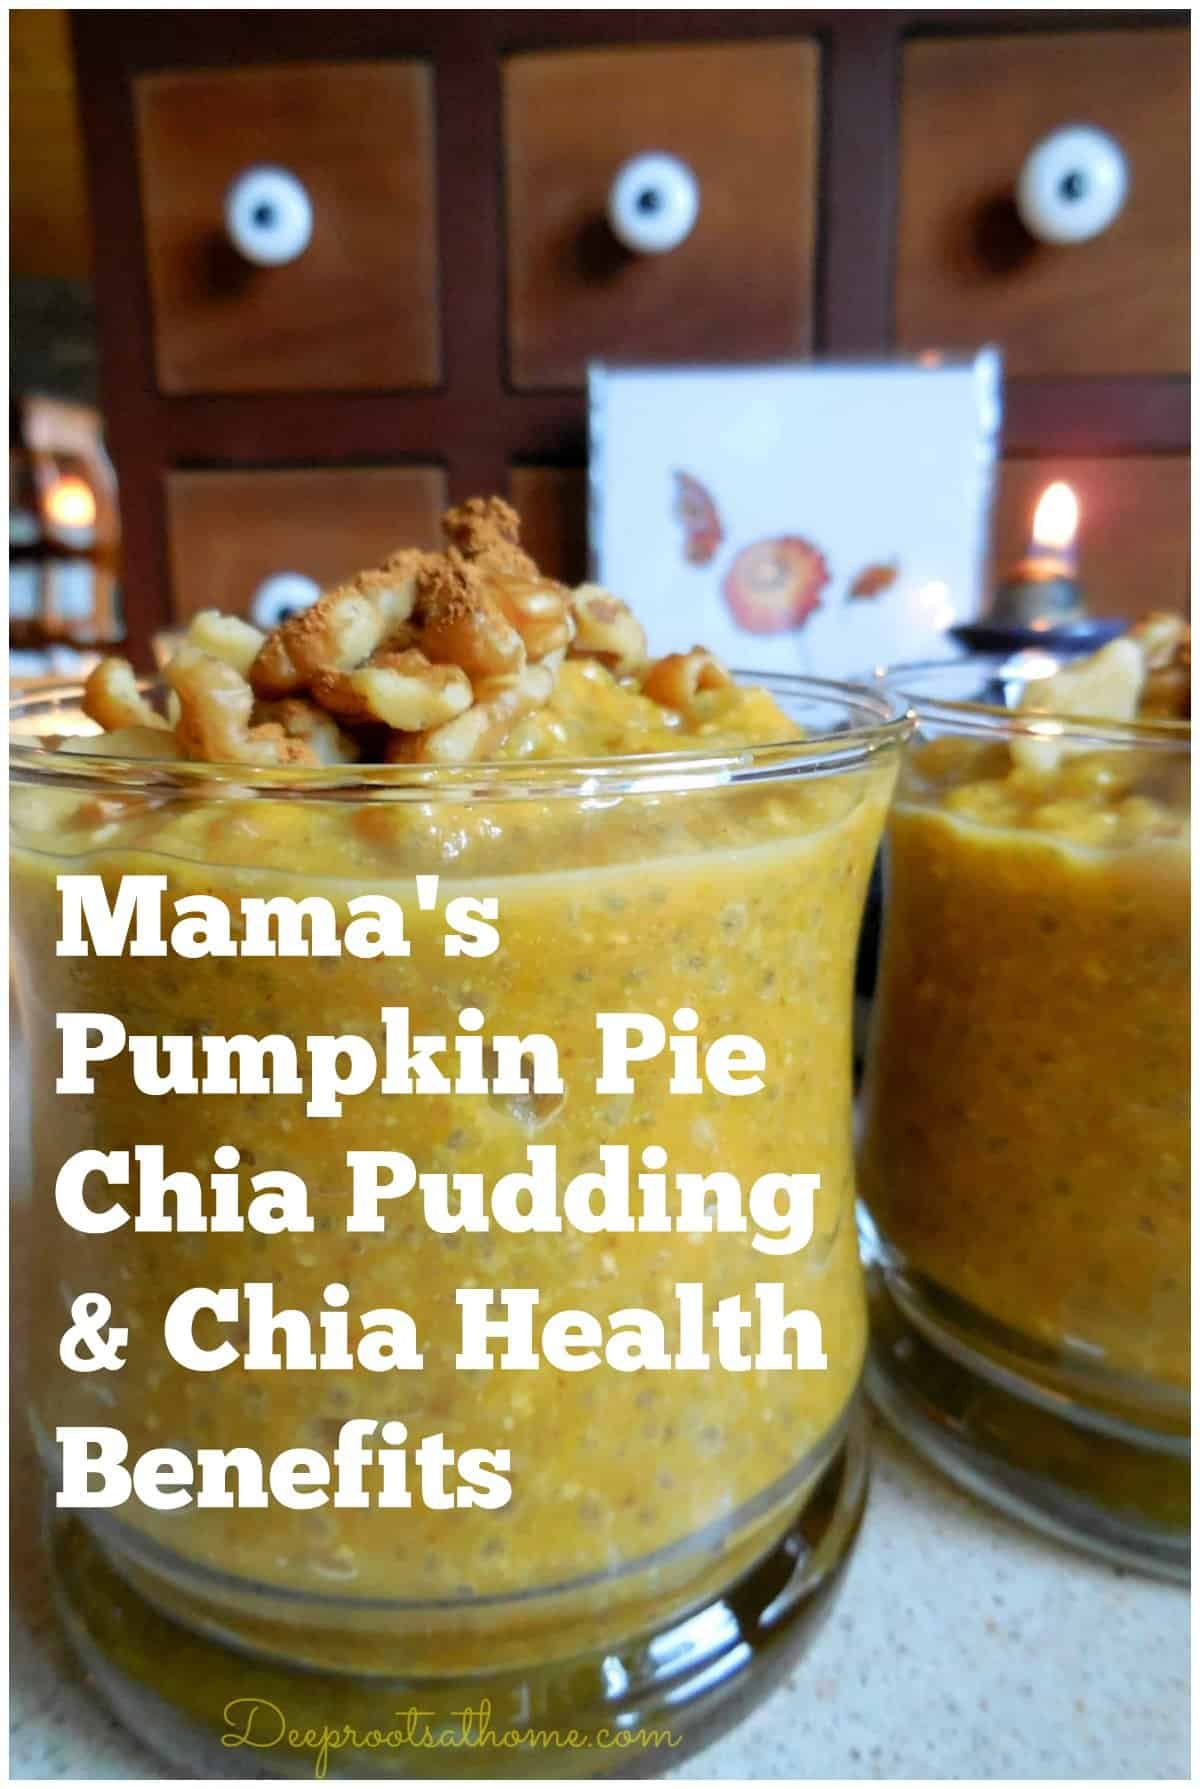 Mama's Pumpkin Pie Chia Pudding & Chia Health Benefits. Chia pudding